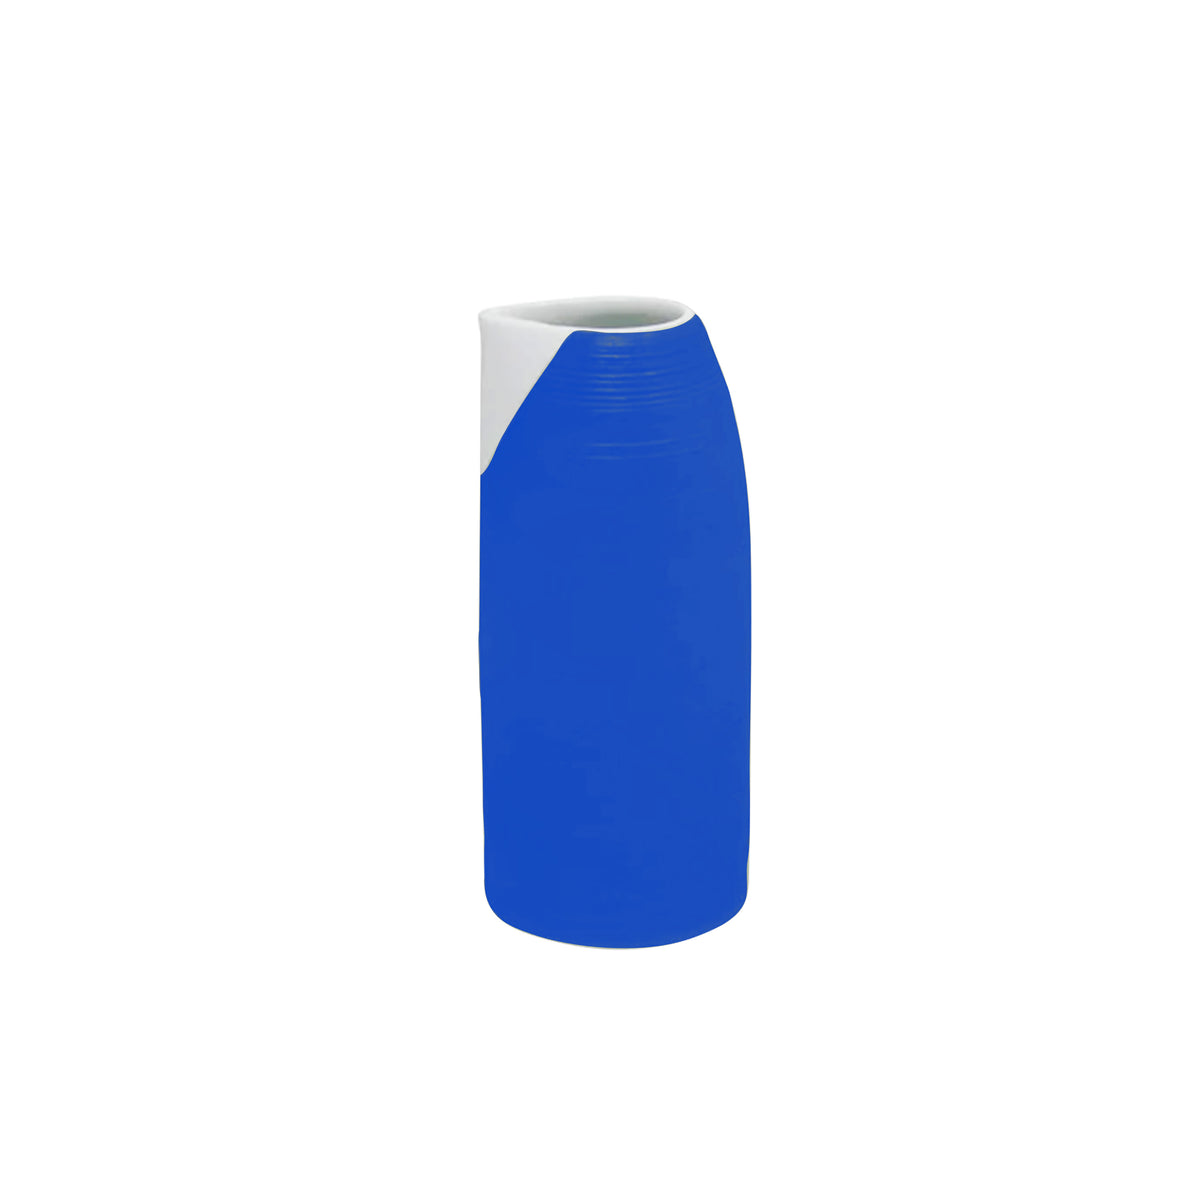 HEMISPHERE Royal Blue - Sake jug, large